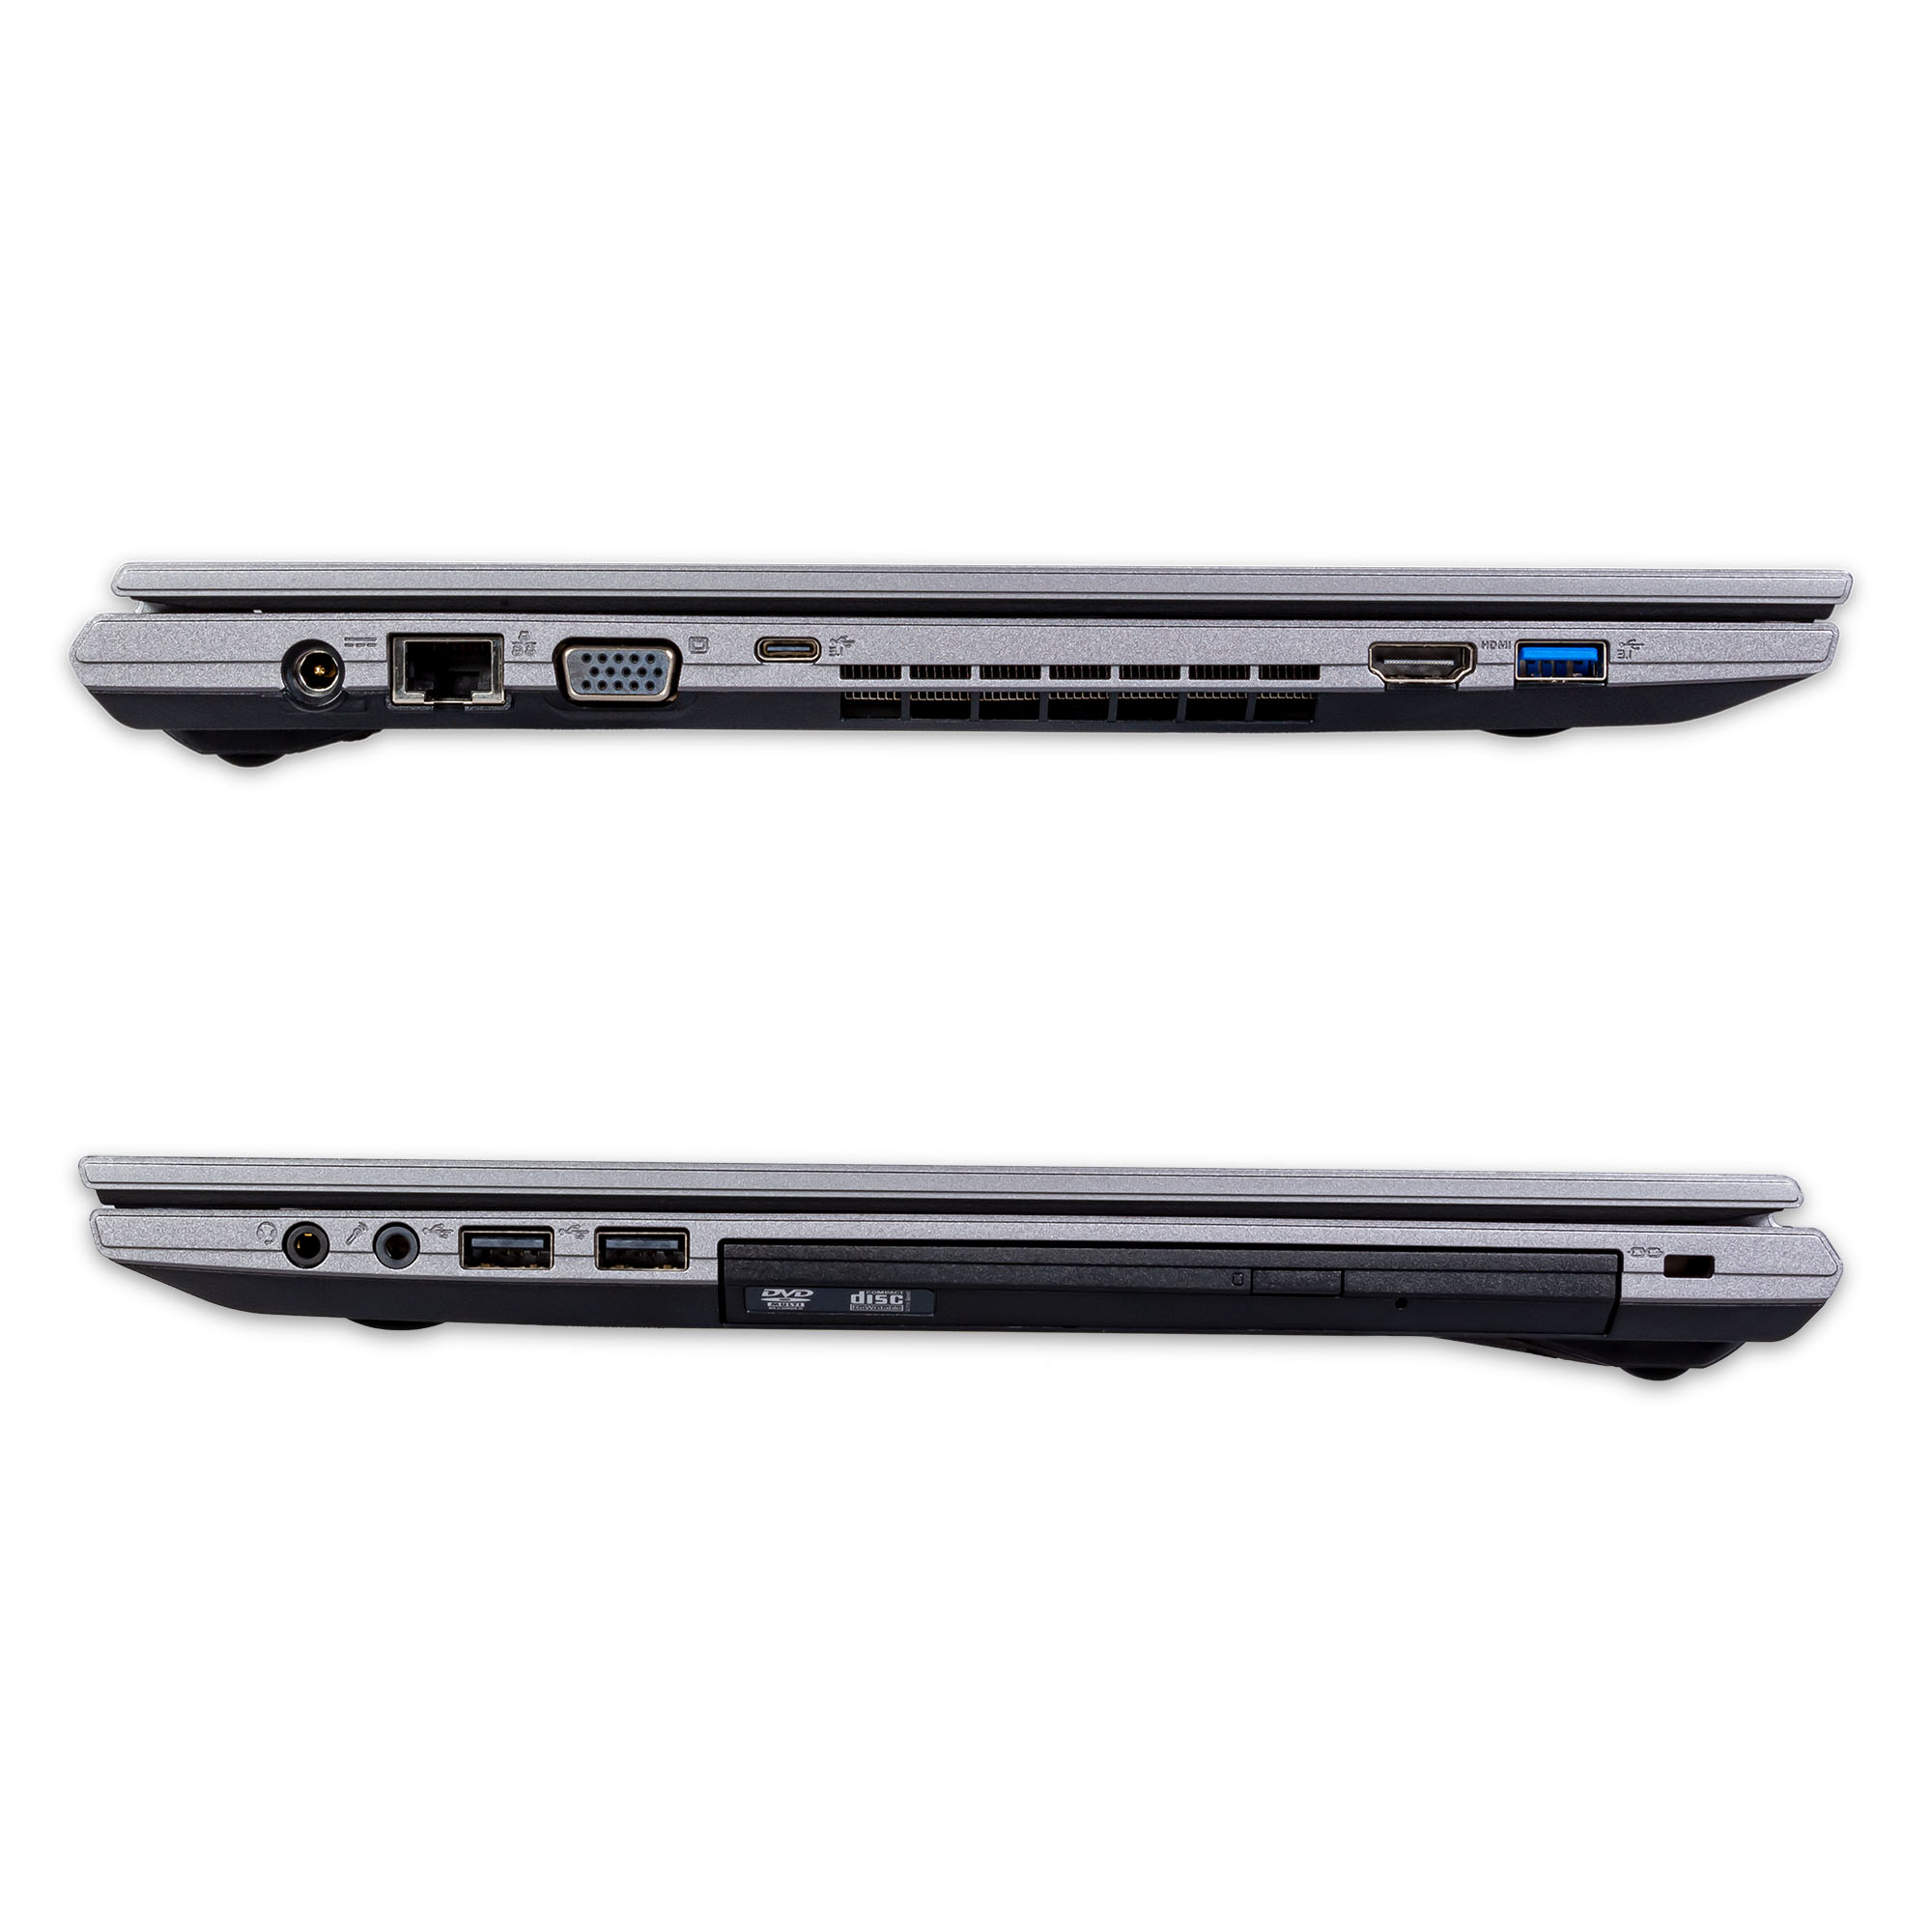 PADERBOOK GB i55, fertig RAM, Display, und aktiviert, Notebook 2000 GB Zoll installiert Silber Basic SSD, 8 mit Metallic 15,6